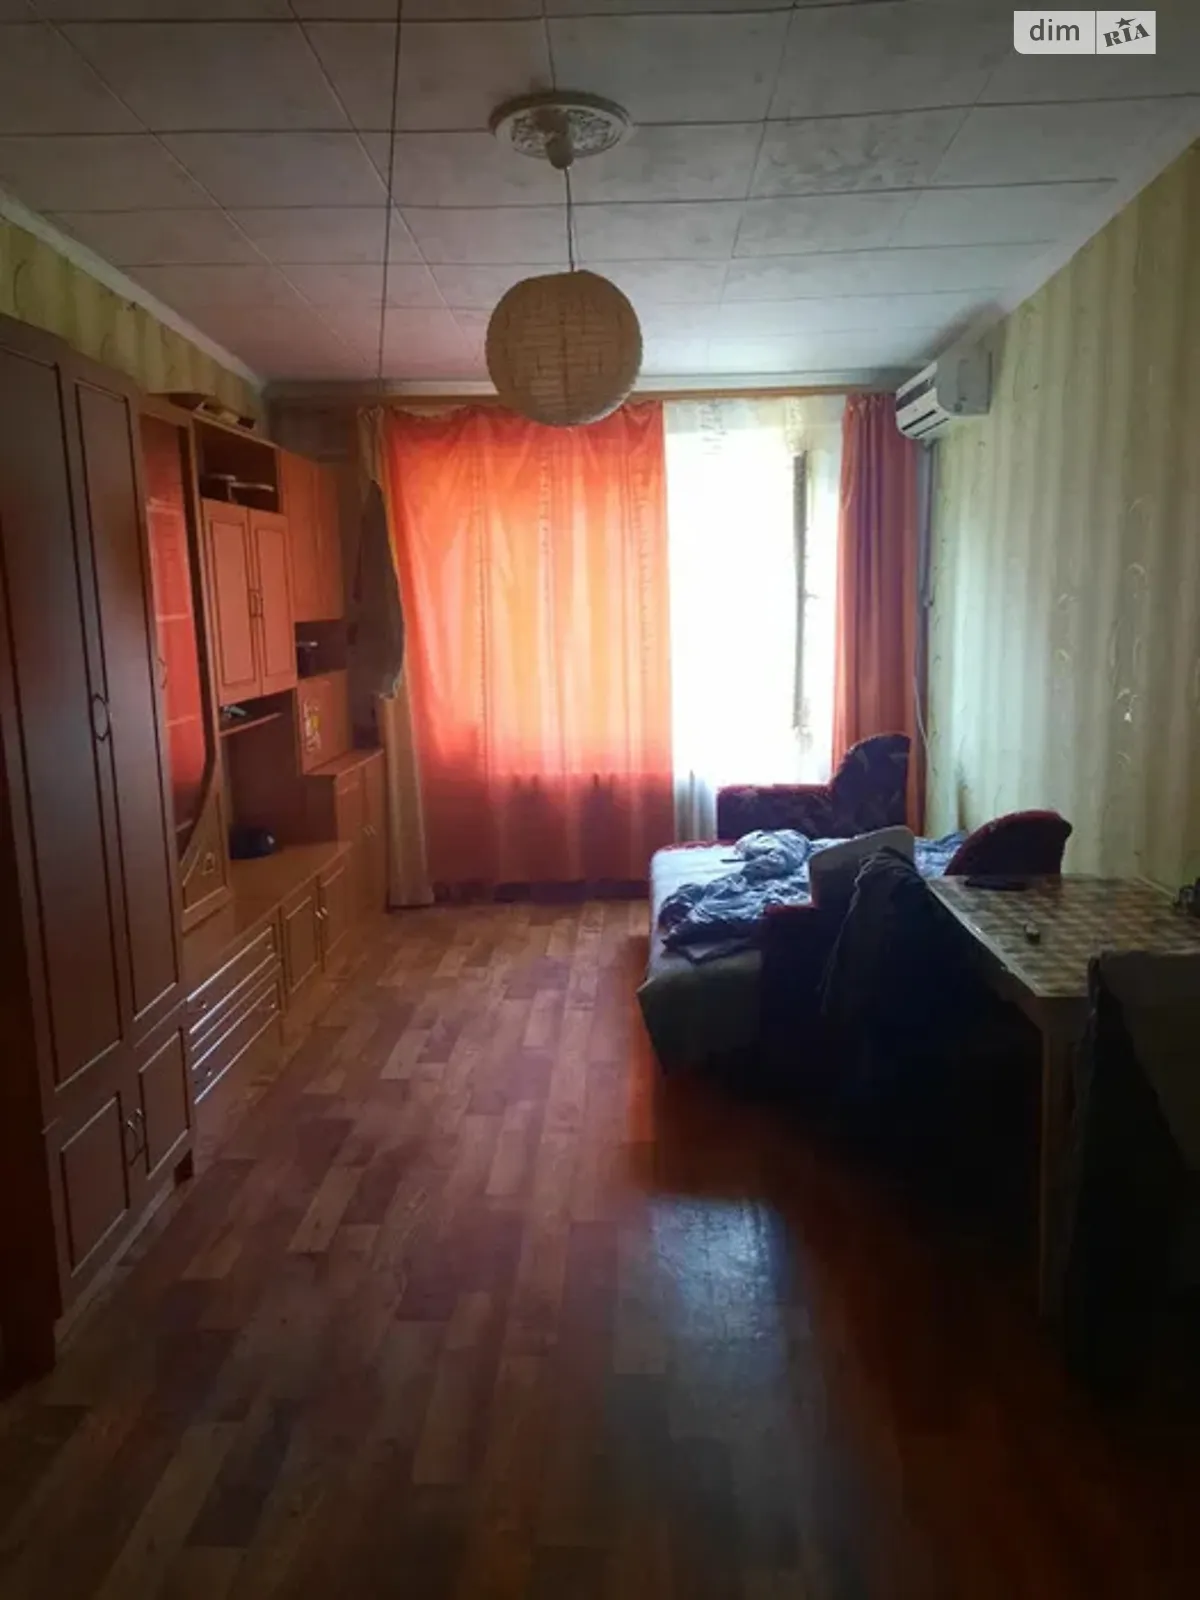 Продается комната 28 кв. м в Одессе, цена: 9500 $ - фото 1